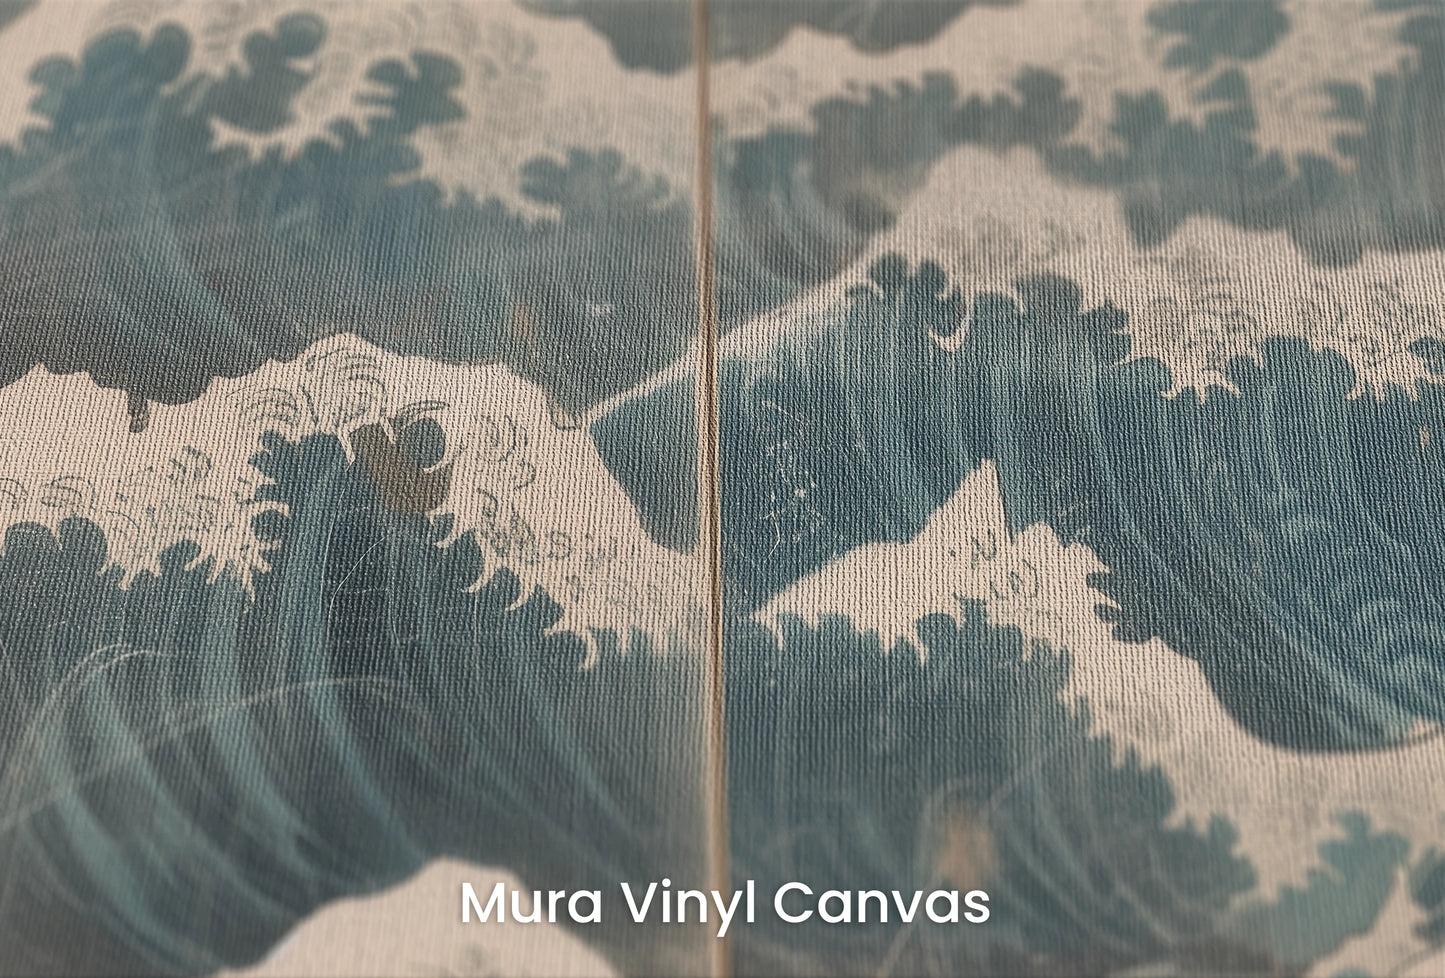 Zbliżenie na artystyczną fototapetę o nazwie Serene Ocean Hues na podłożu Mura Vinyl Canvas - faktura naturalnego płótna.